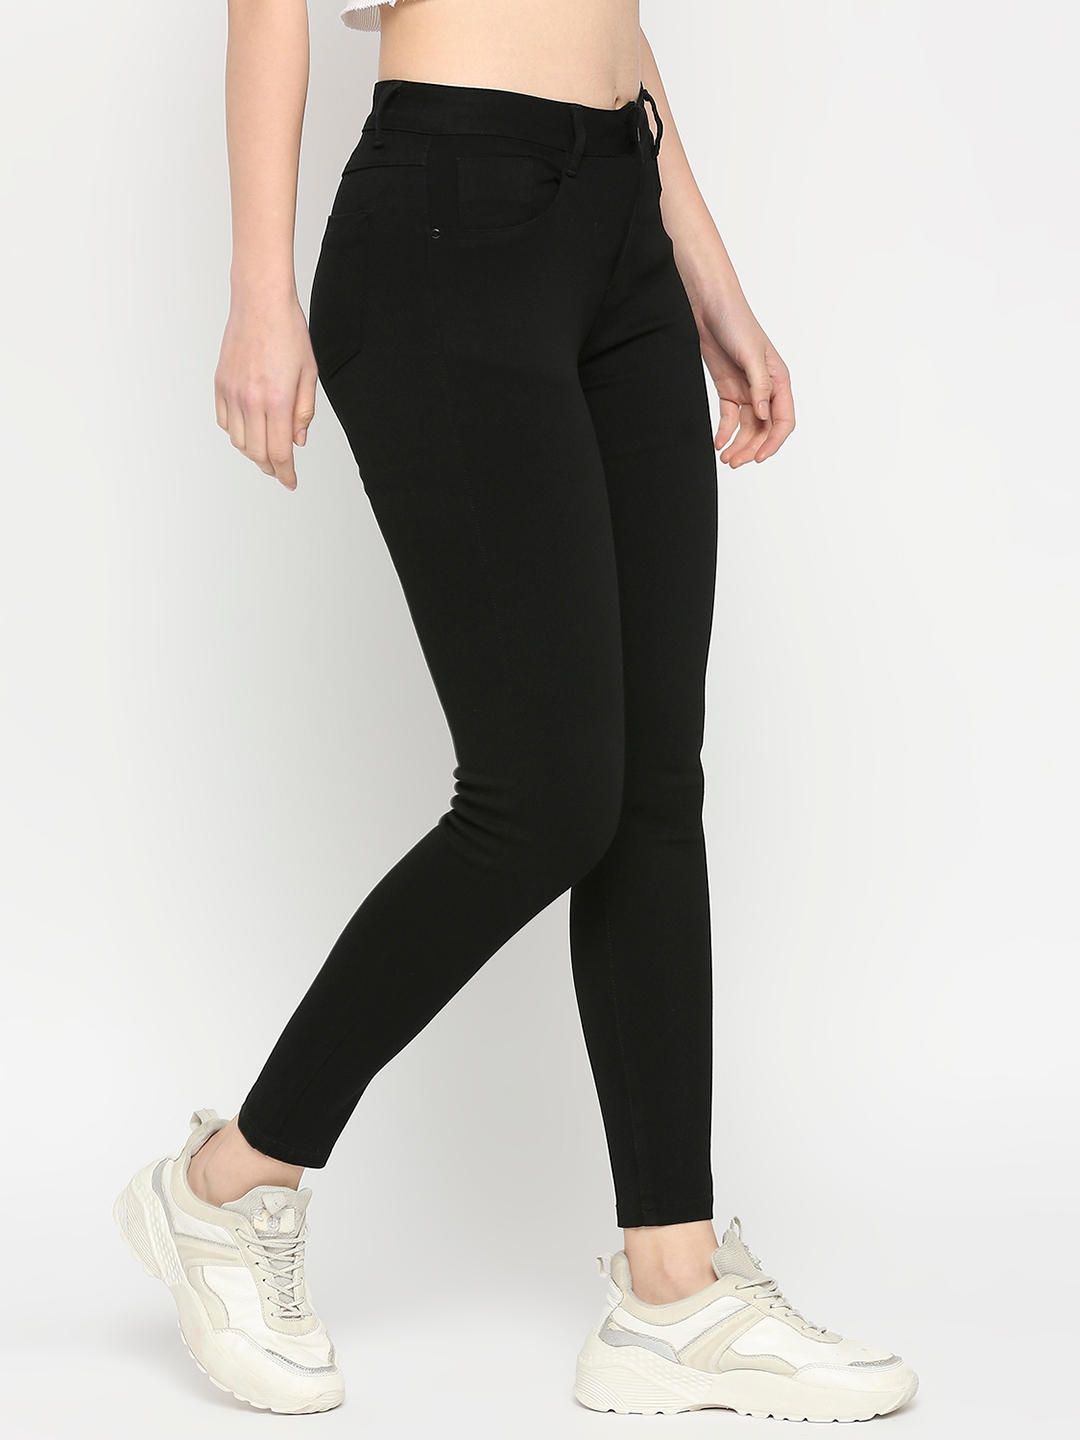 spykar | Women's Black Cotton Solid Trackpants 2